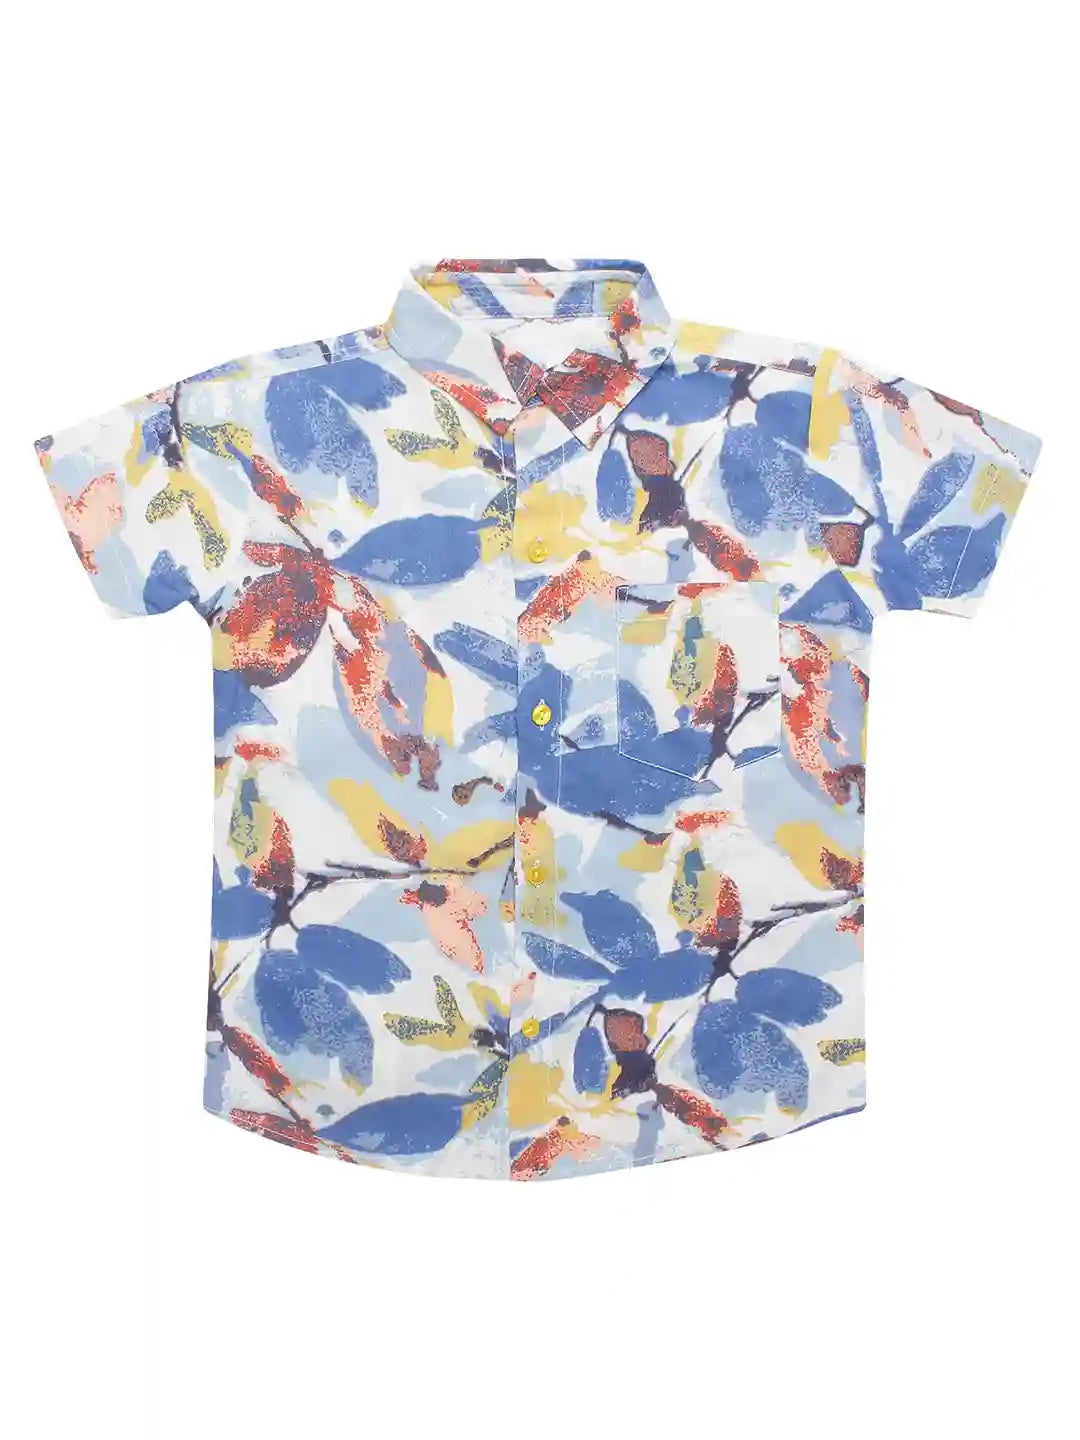 Boys Co-ord Set, Floral Print Shirt & Shorts Ensemble, Blue Colour